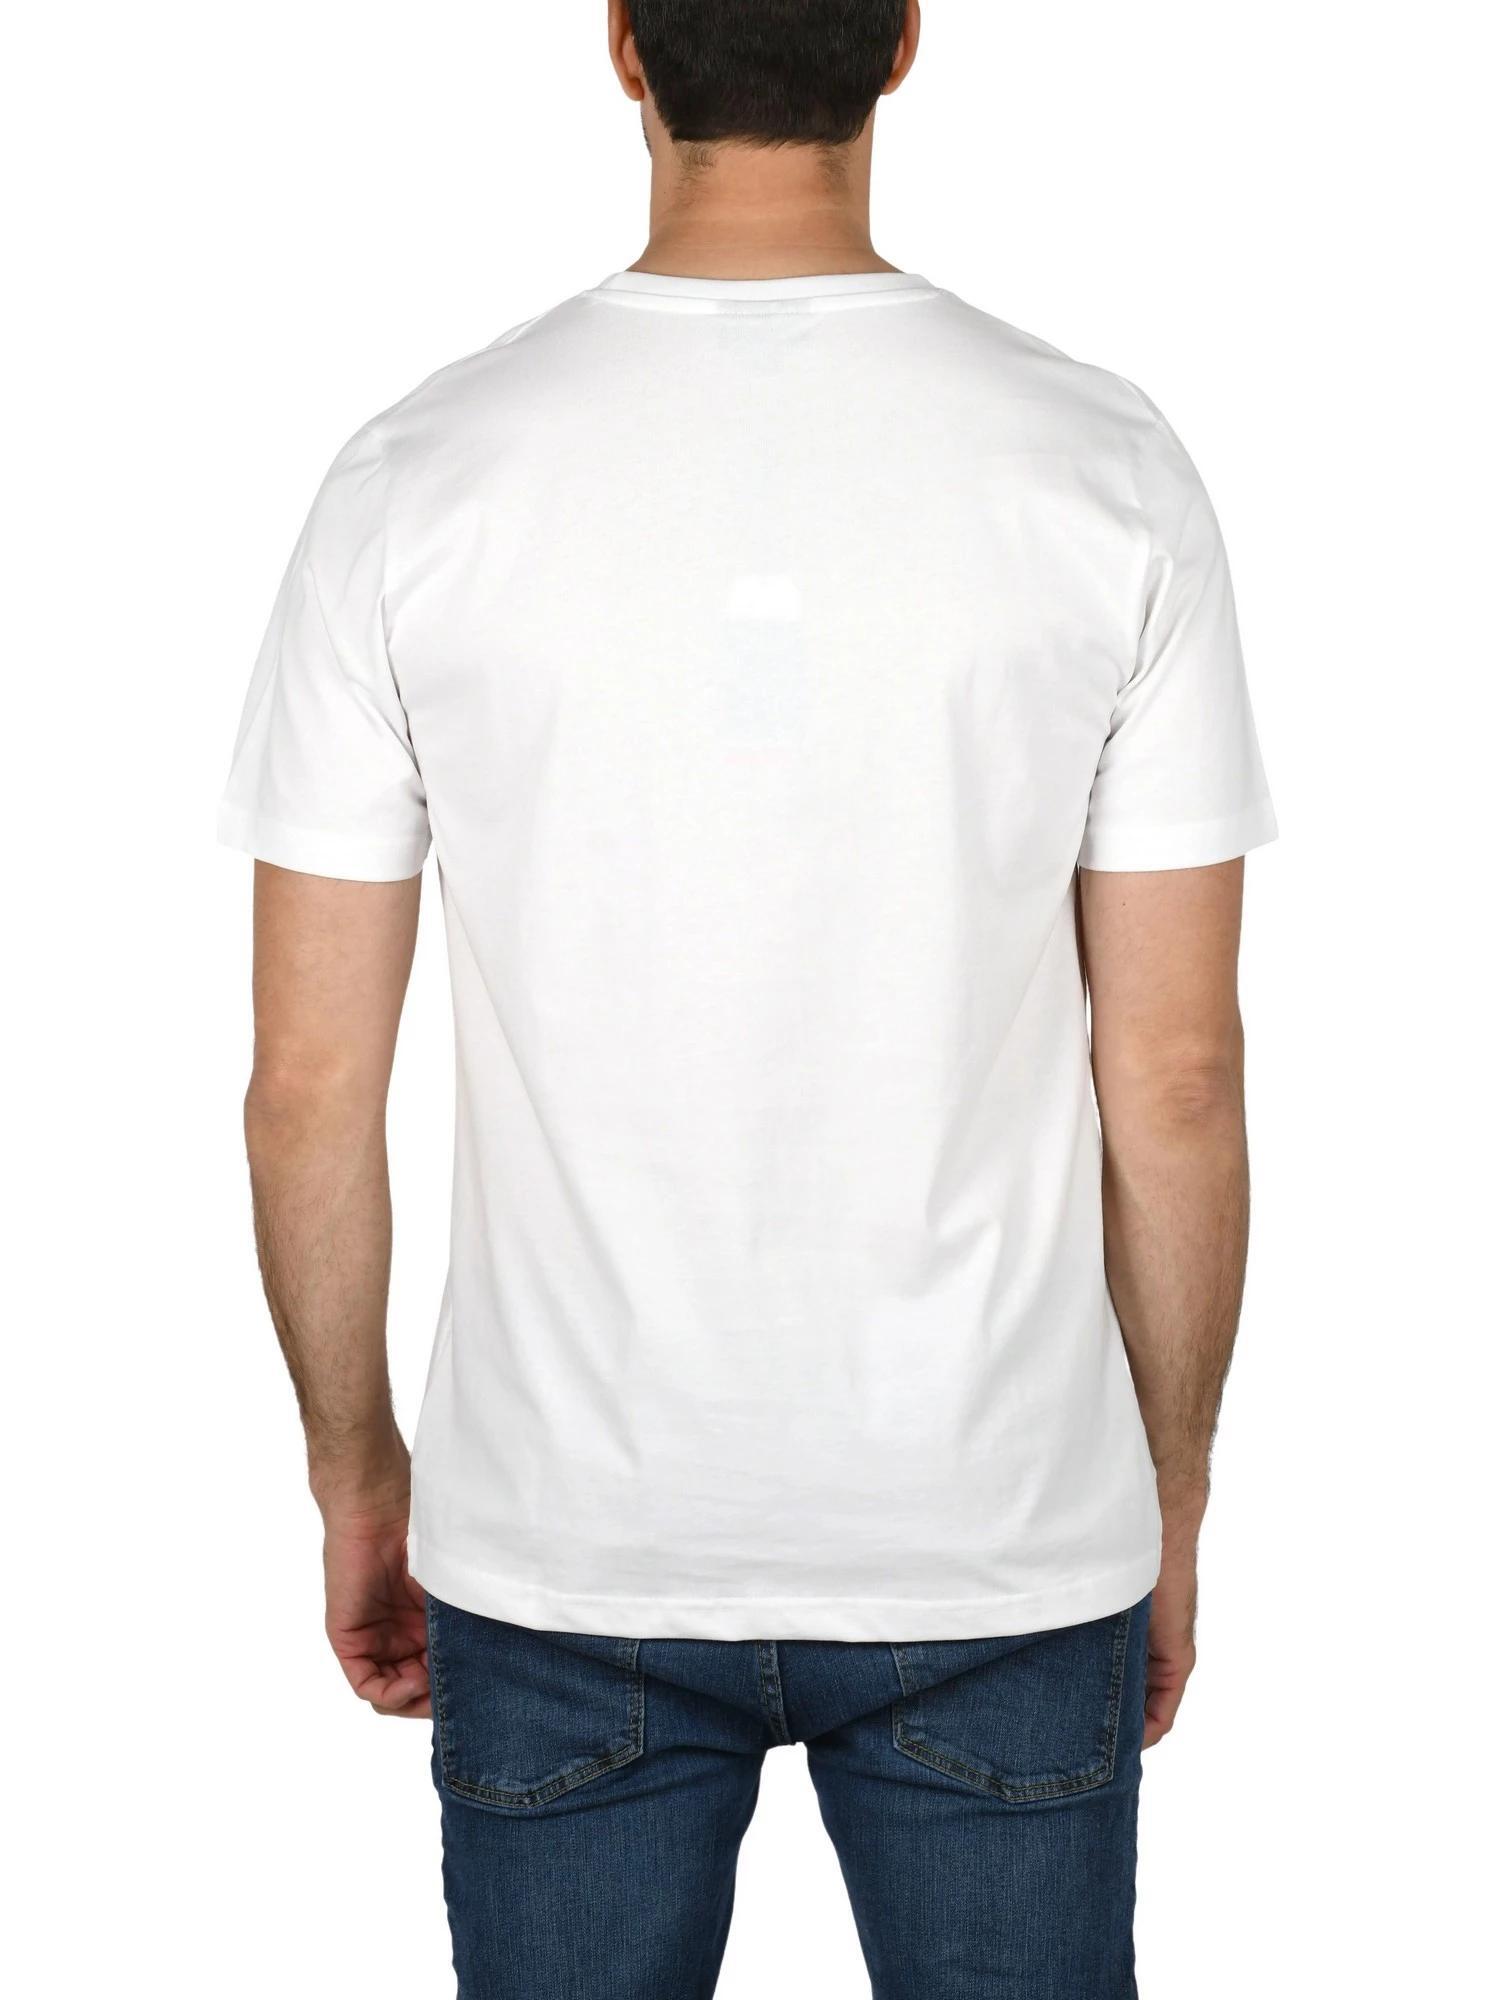 Holm T-Shirt férfi rövid ujjú póló - fehér